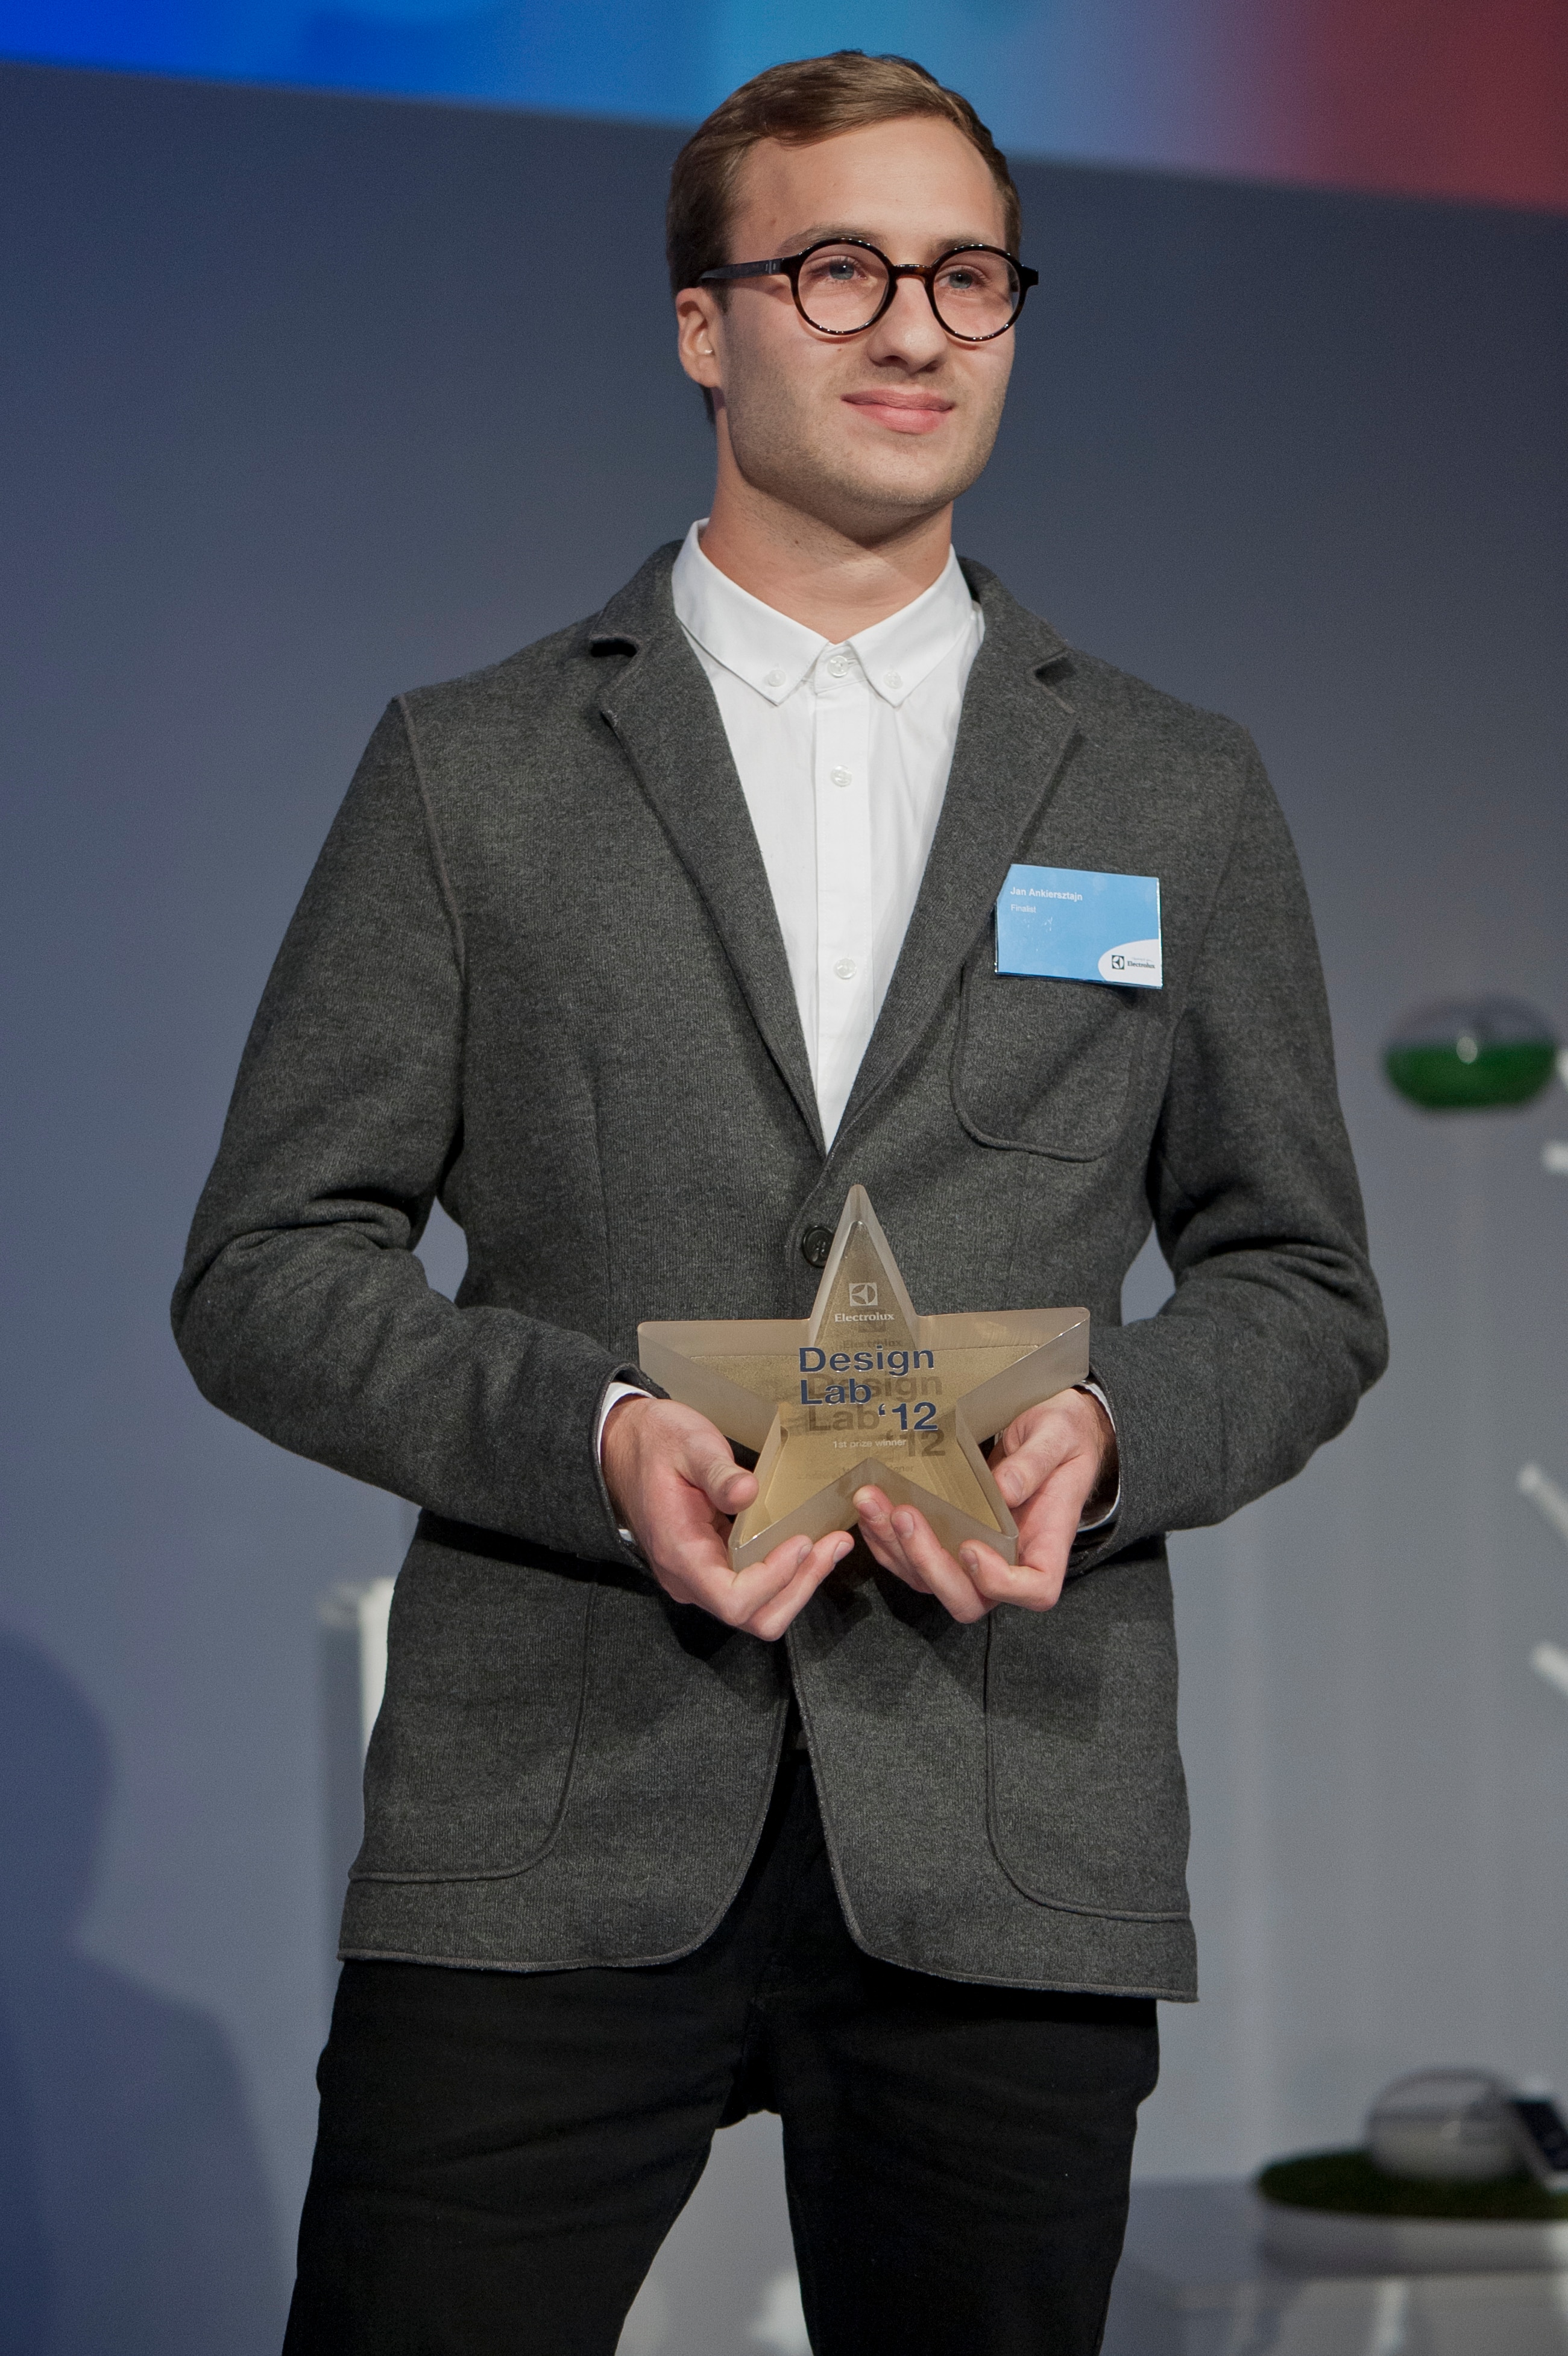 Jan Ankiersztajn from Uniwersytet Artystyczny w Poznaniu in Poznań, Poland, won the Electrolux Design Lab 2012 competition with a floating air cleaner called Aeroball.